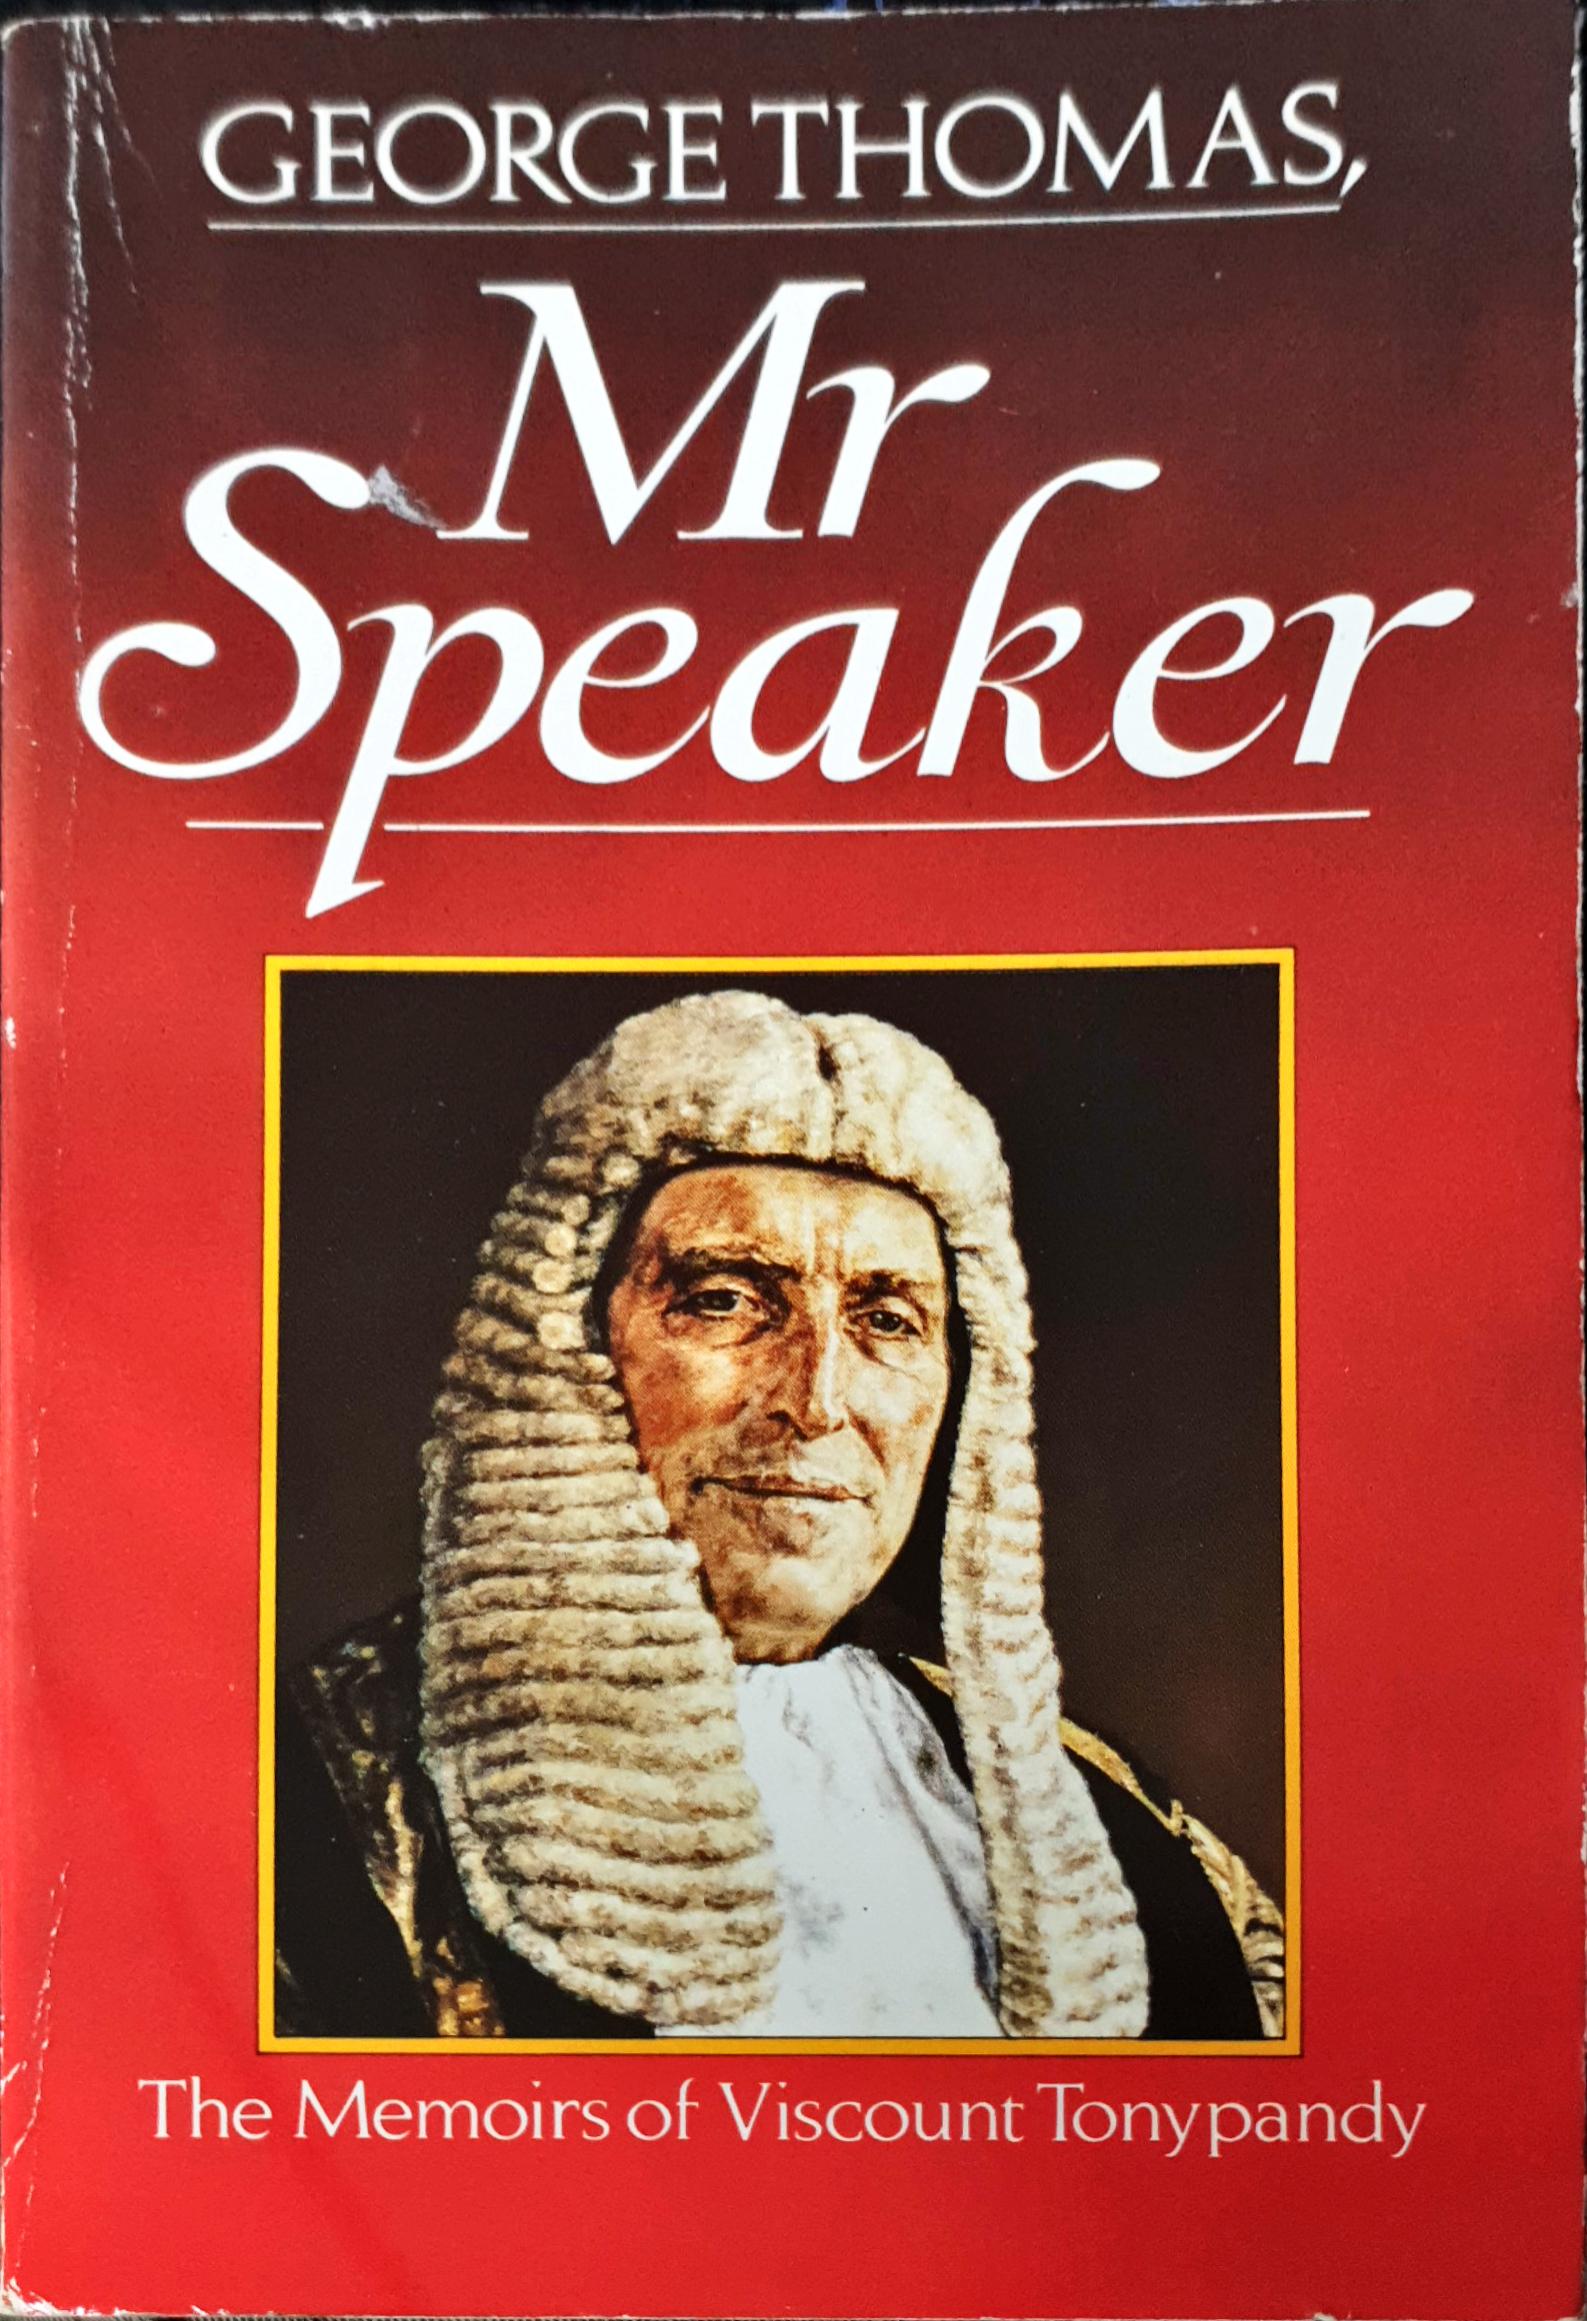 George Thomas, Mr Speaker : the memoirs the Viscount Tonypandy